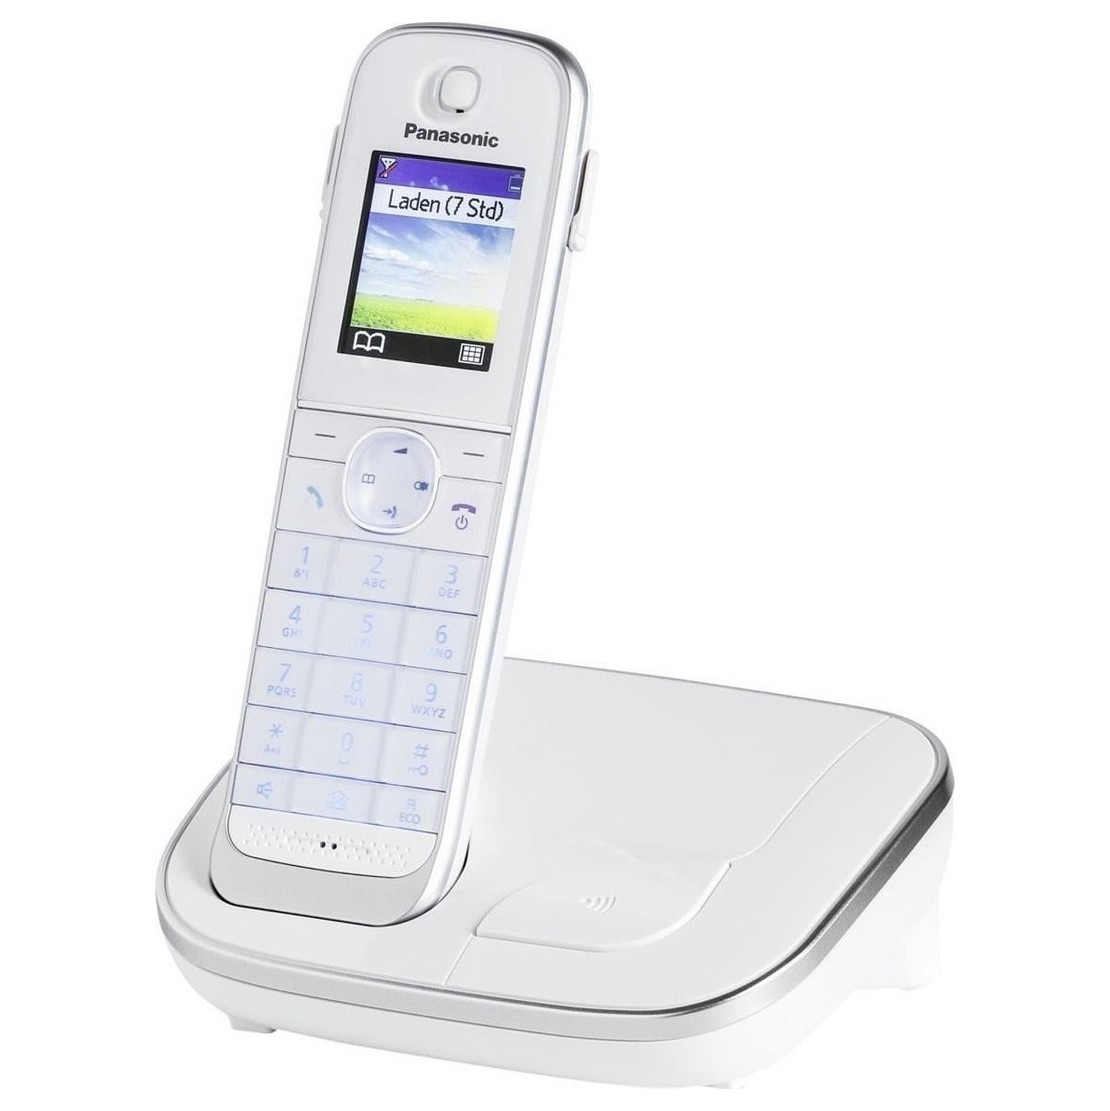 Refurbished (Εκθεσιακό) Ασύρματο Ψηφιακό Τηλέφωνο Panasonic KX-TGJ310GRW Λευκό με Δυνατότητα Σύνδεσης Hands Free